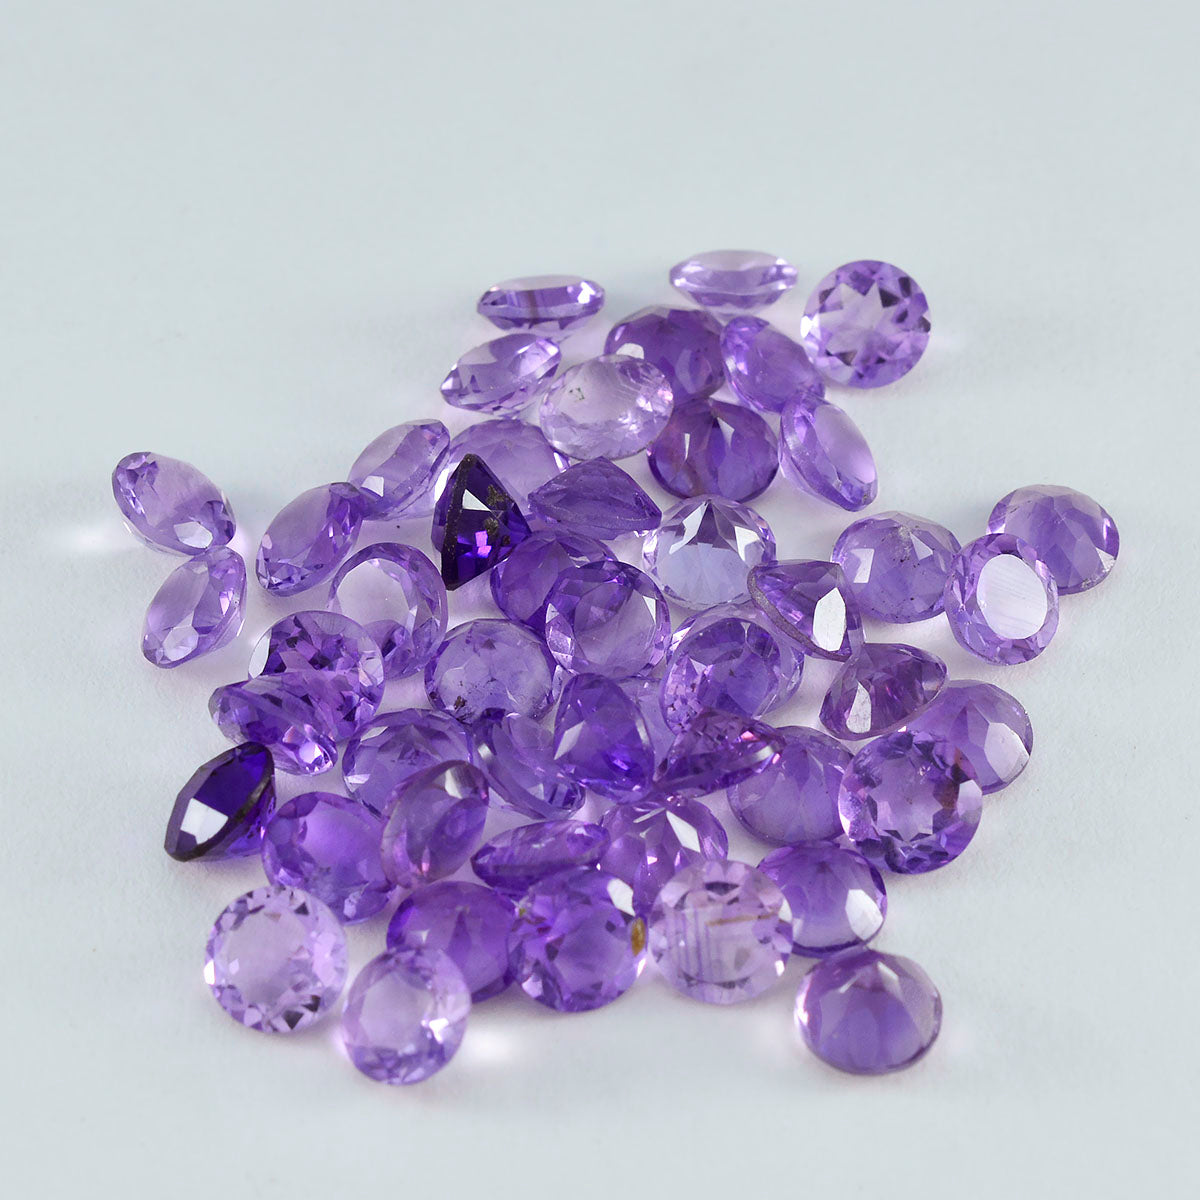 Riyogems 1PC Natural Purple Amethyst Faceted 4x4 mm Round Shape wonderful Quality Stone